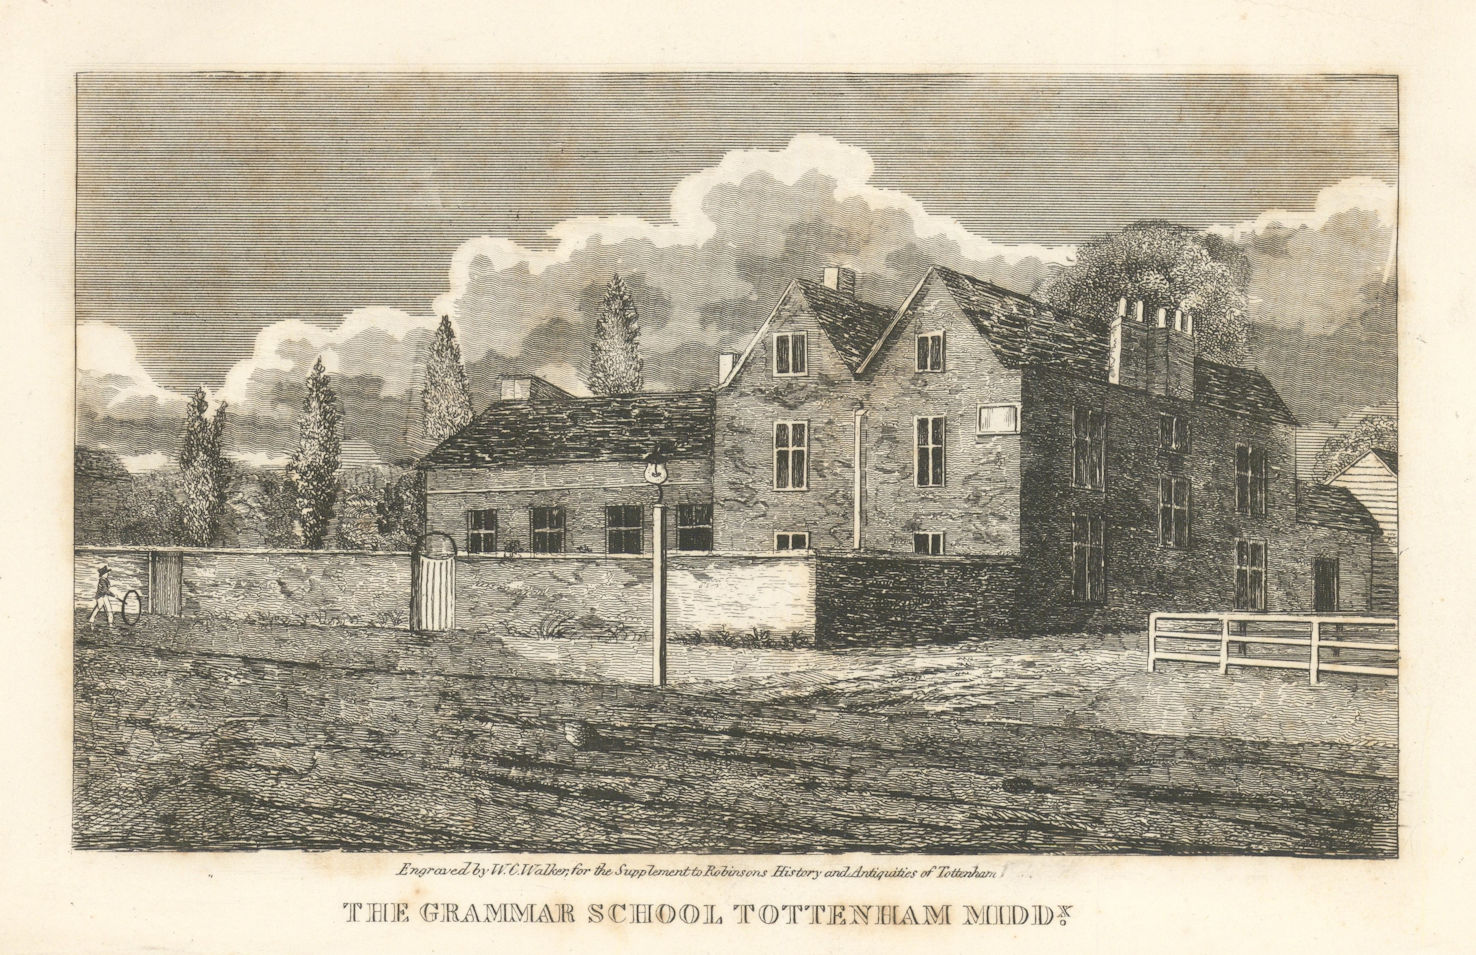 Tottenham Grammar School <1840 whose pupils founded Tottenham Hotspur FC 1840